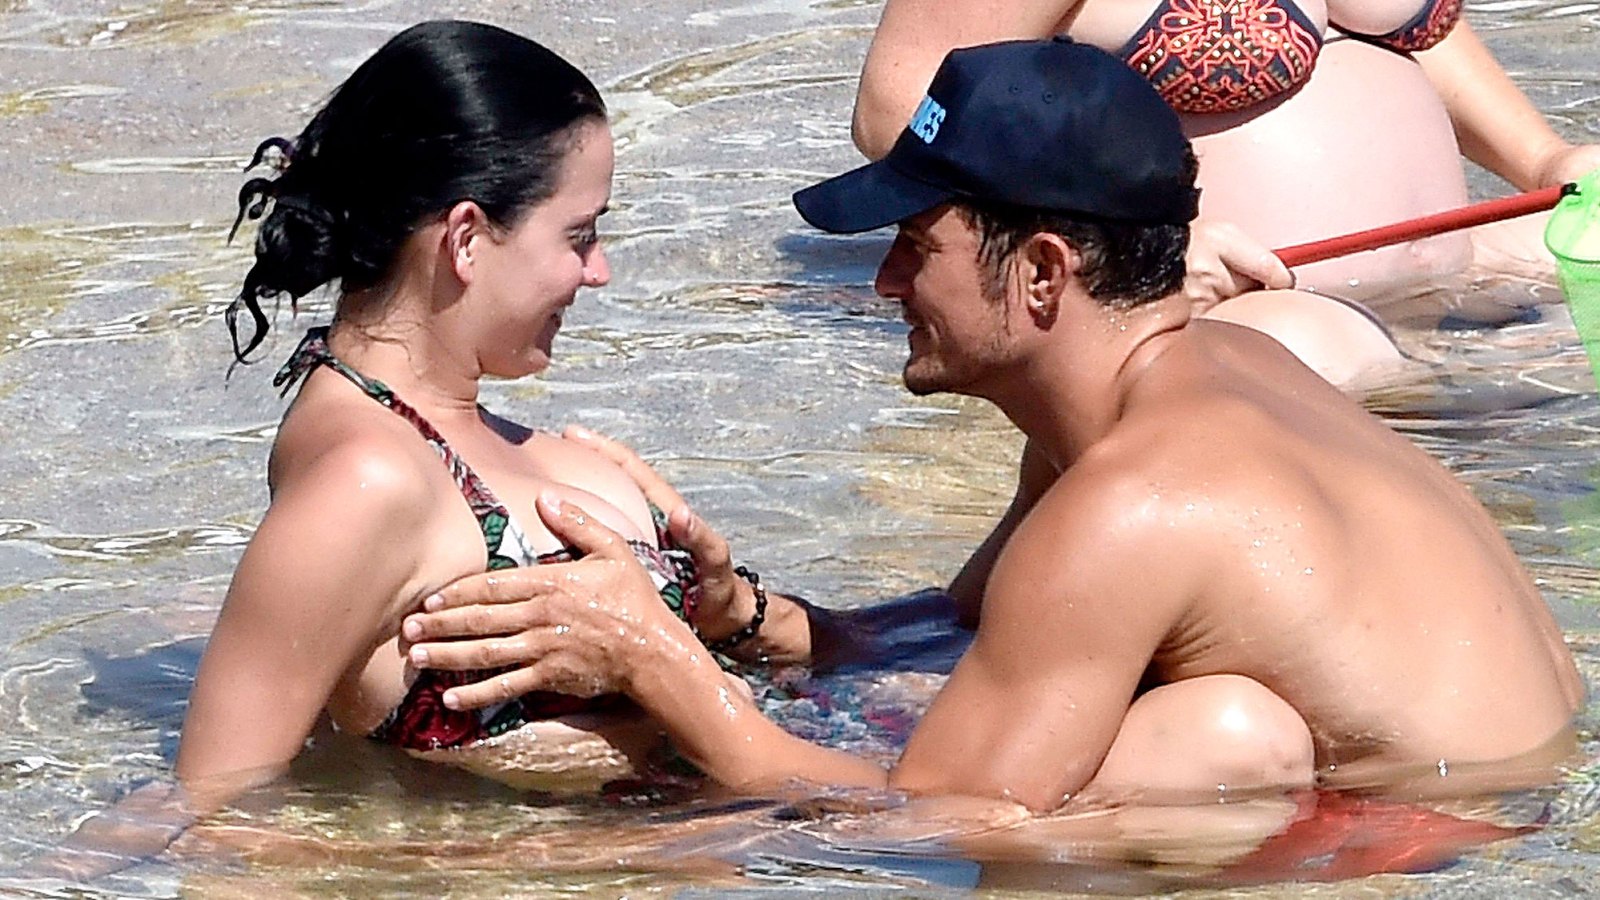 Secret Teen Boobs - Orlando Bloom Grabs Katy Perry's Boobs During Beach Vacation